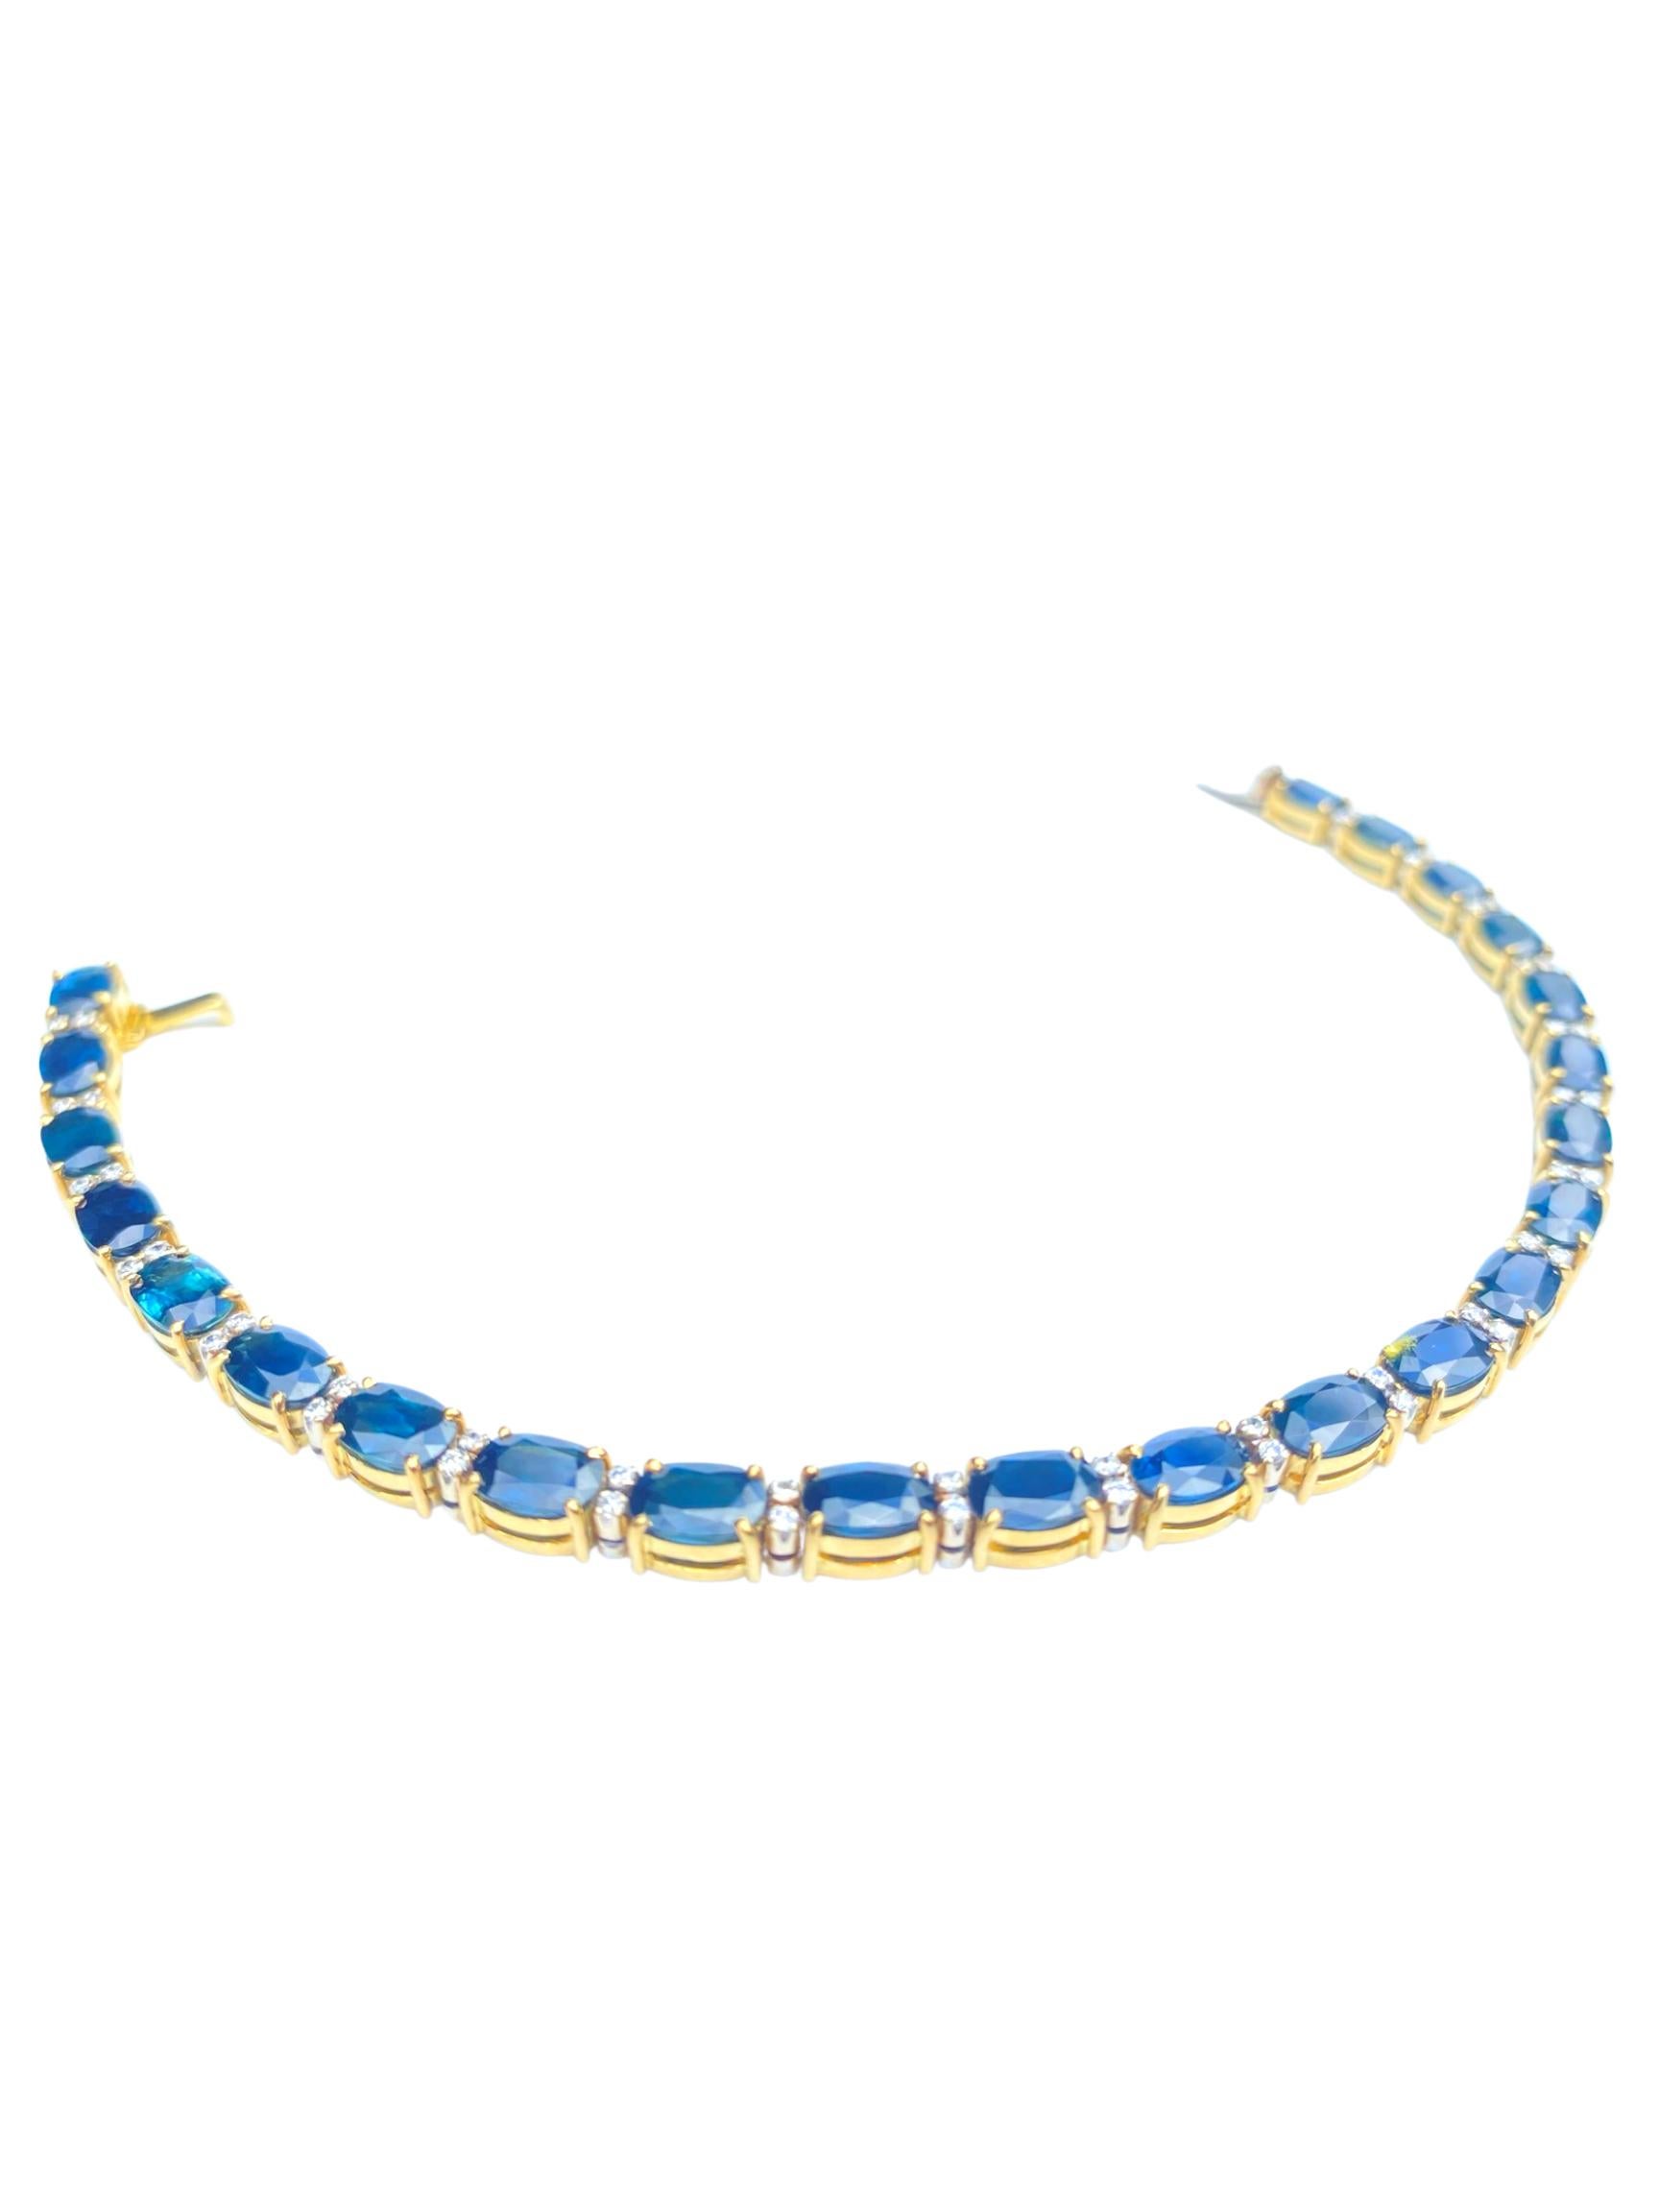 blue sapphire bracelet gold